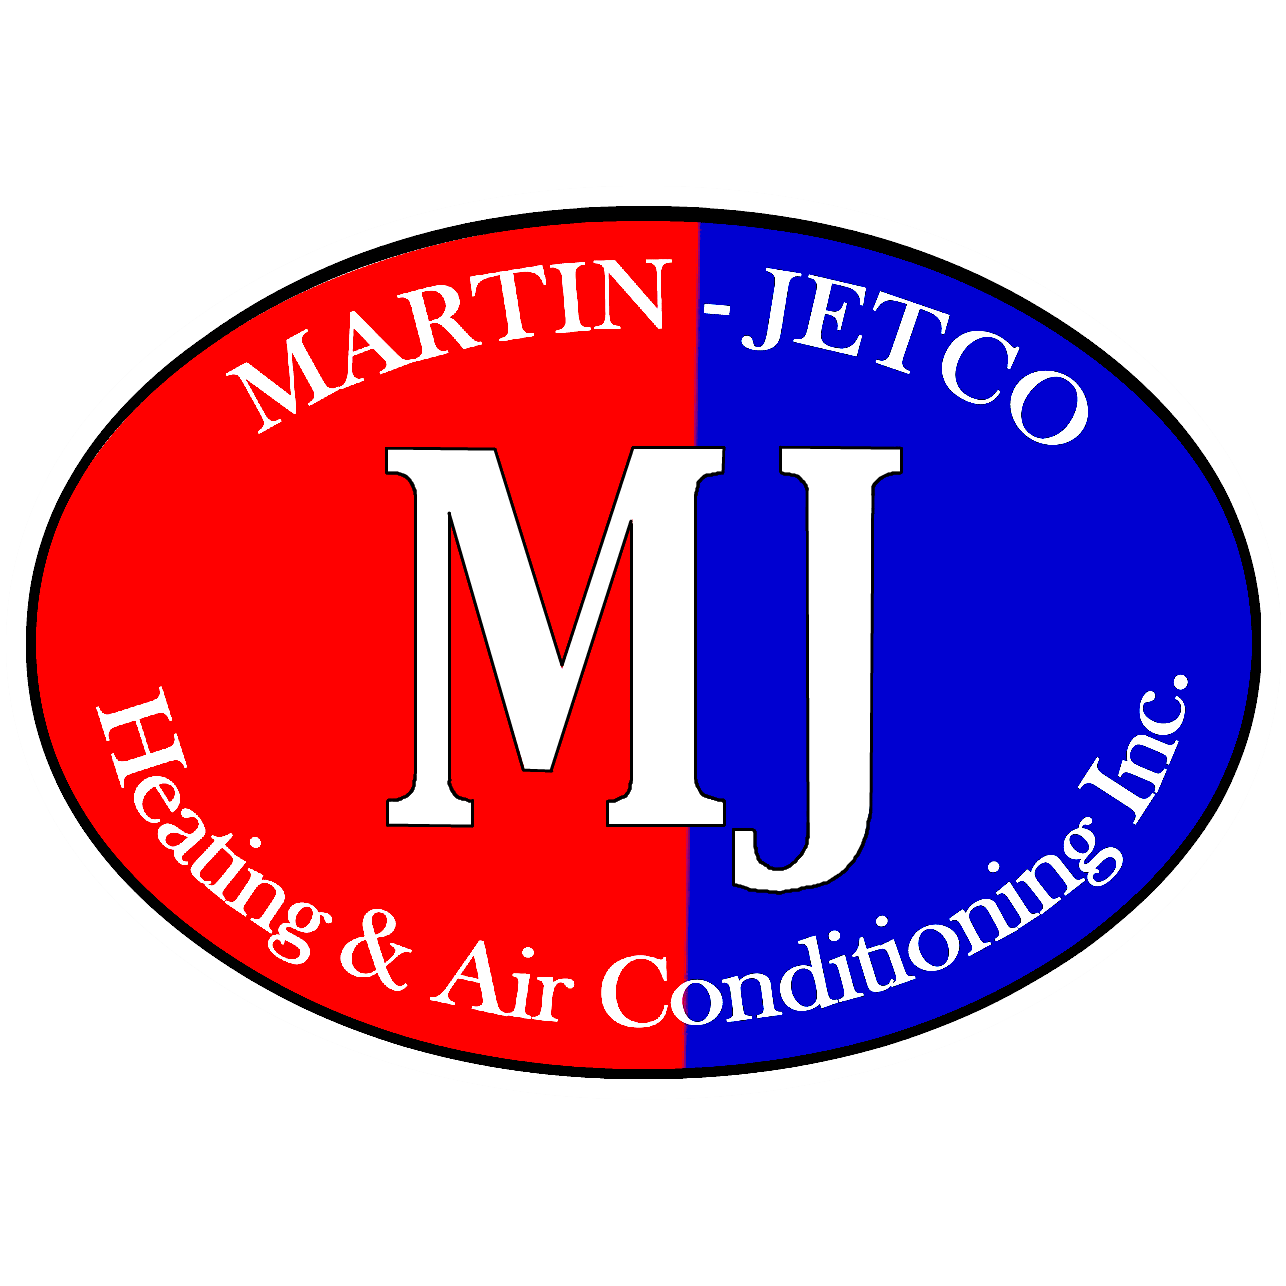 Martin Jetco Heating & Air Conditioning Inc. Logo